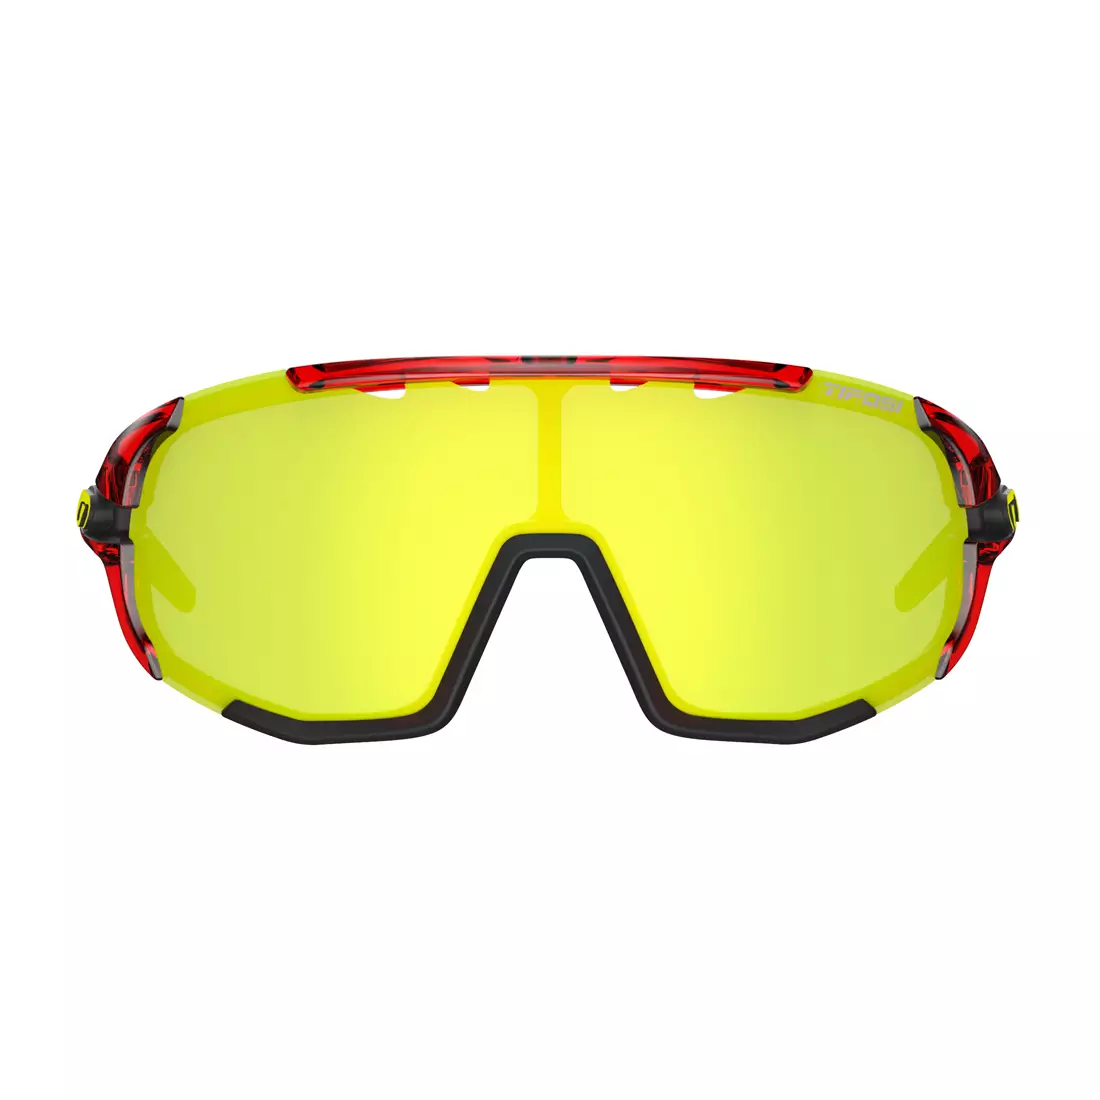 TIFOSI sportovní brýle s vyměnitelnými skly sledge clarion crystal red (Clarion Yellow, AC Red, Clear) TFI-1630109827